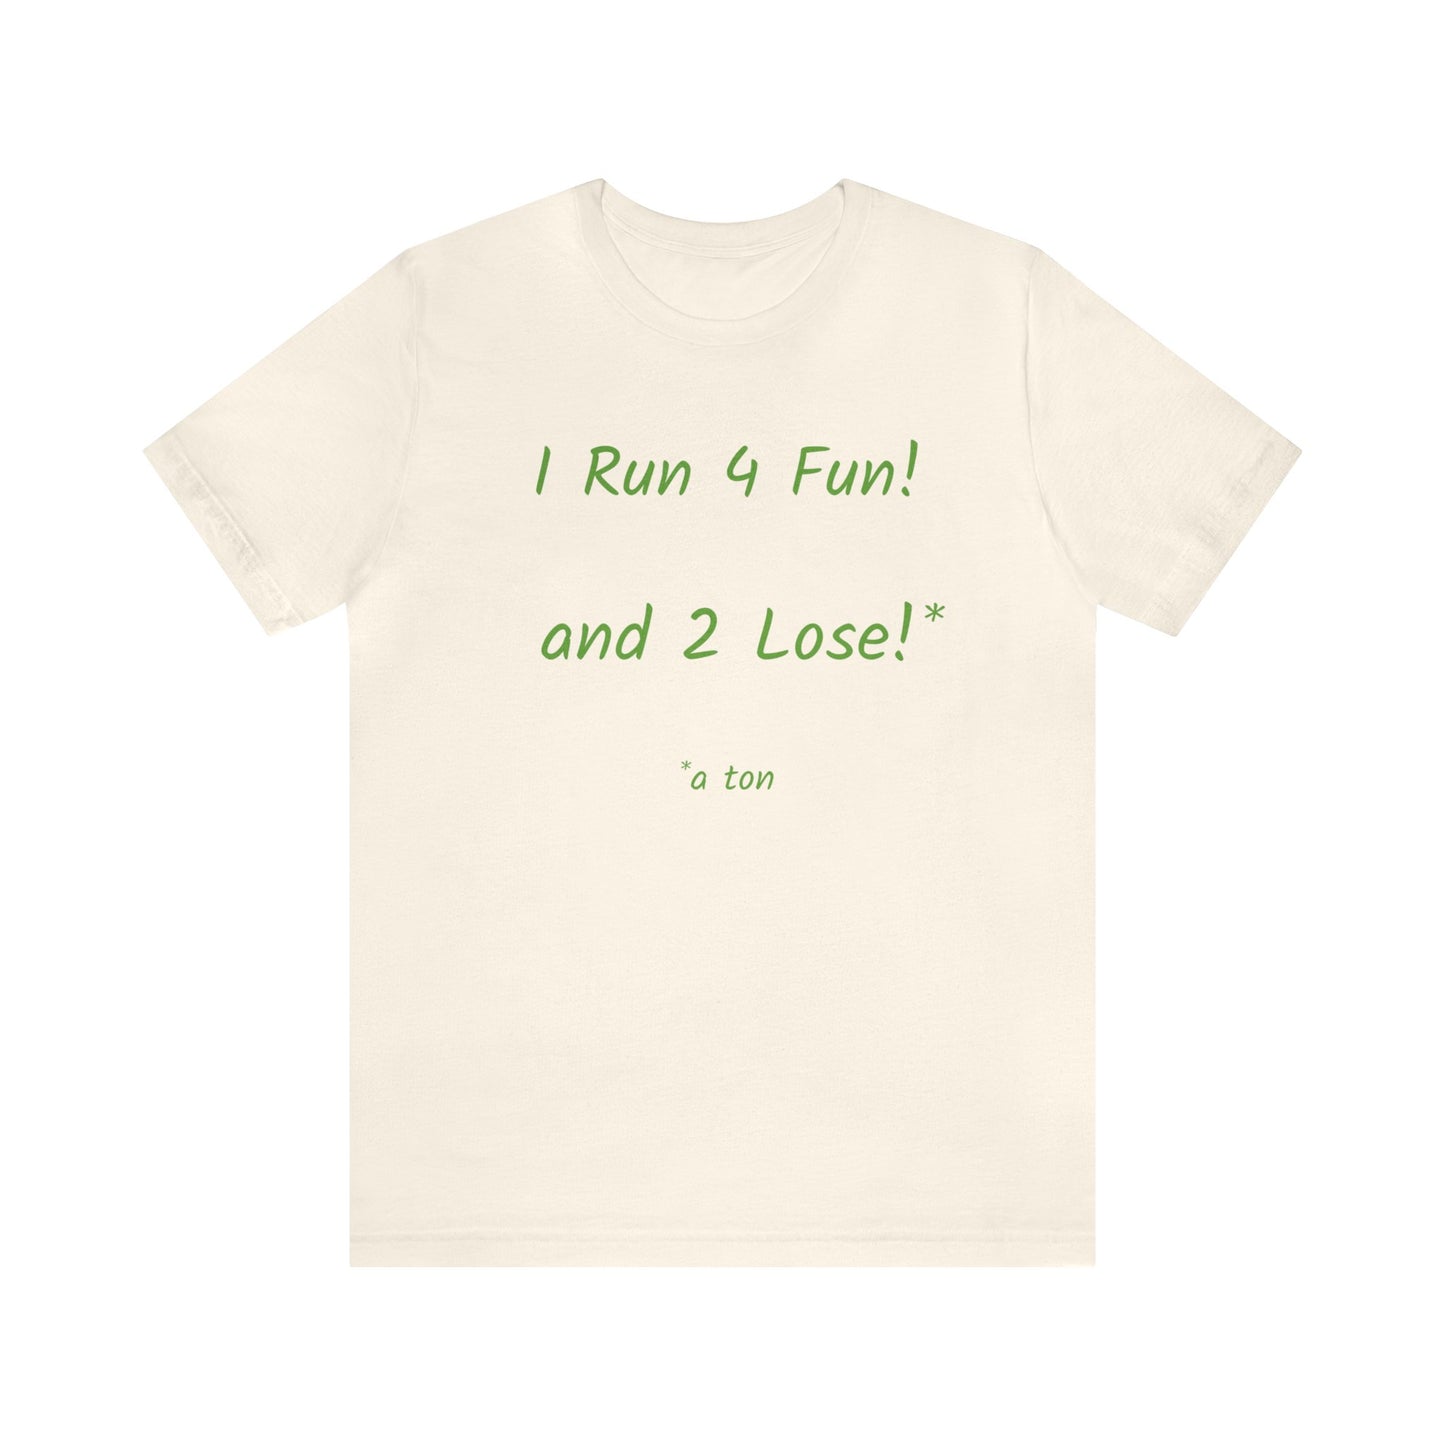 I Run 4 Fun and 2 lose a ton! - Unisex Jersey Short Sleeve Tee